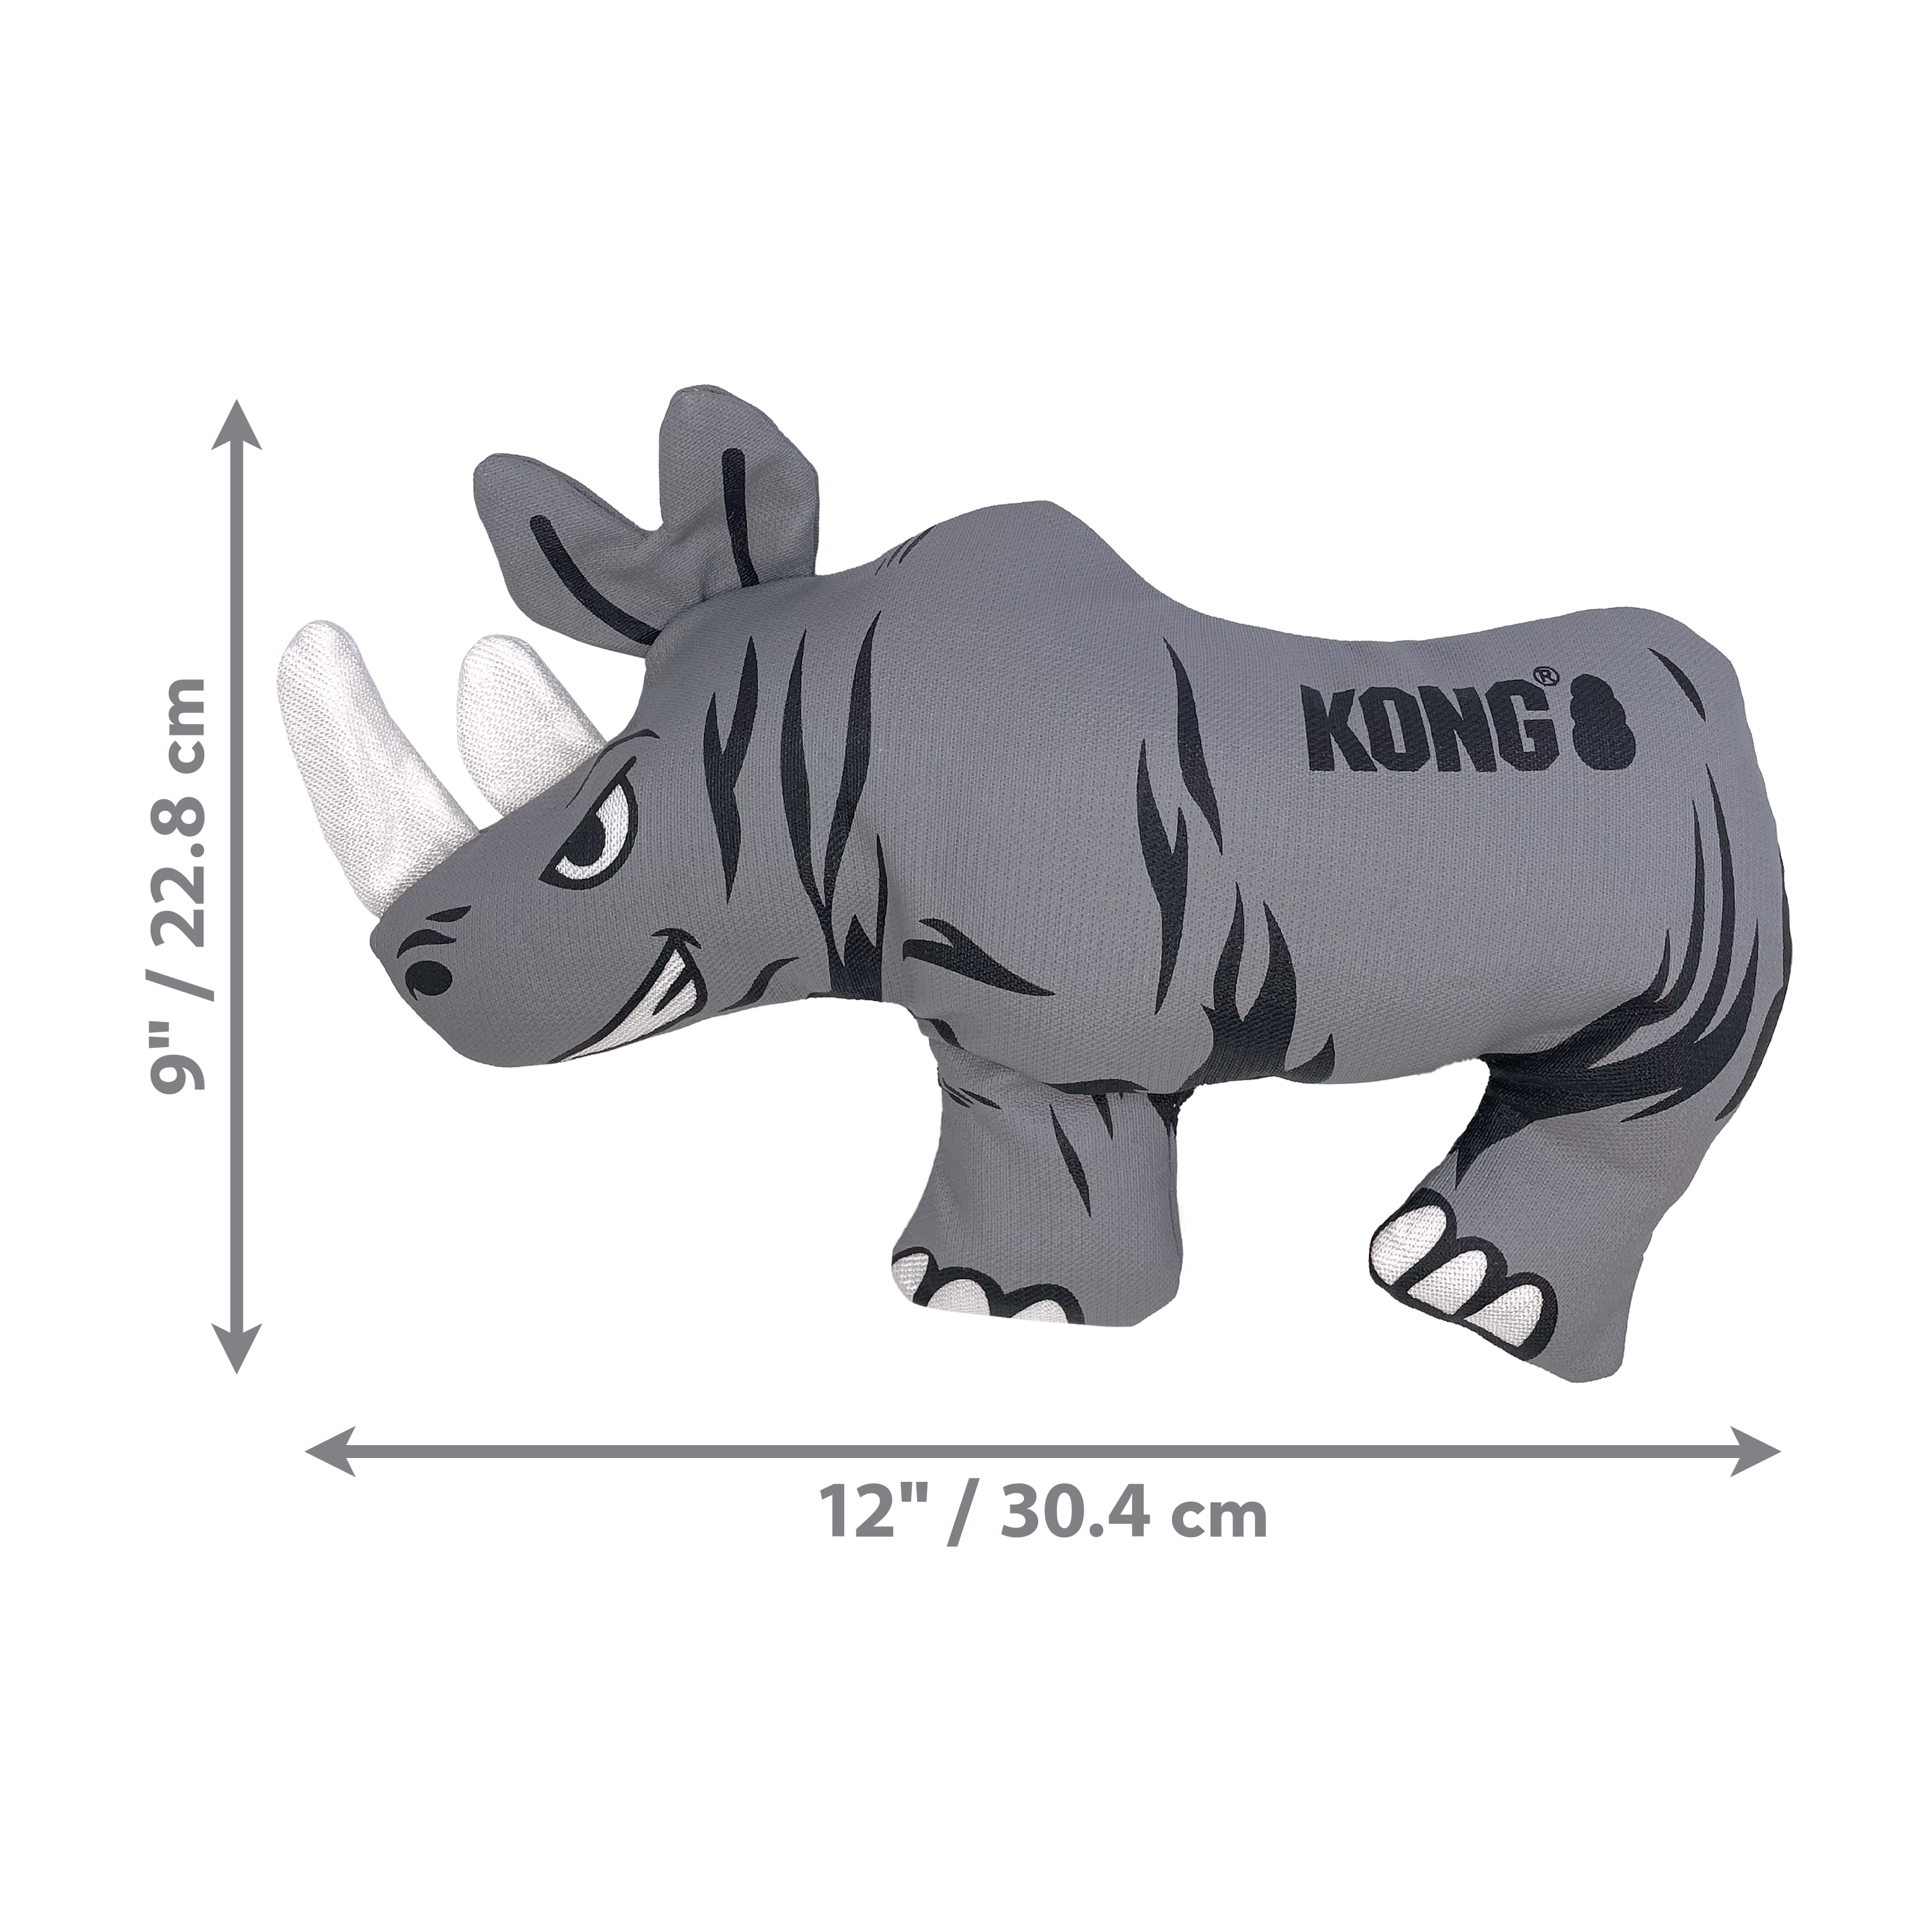 Maxx Rhino dimoffpack produktbillede